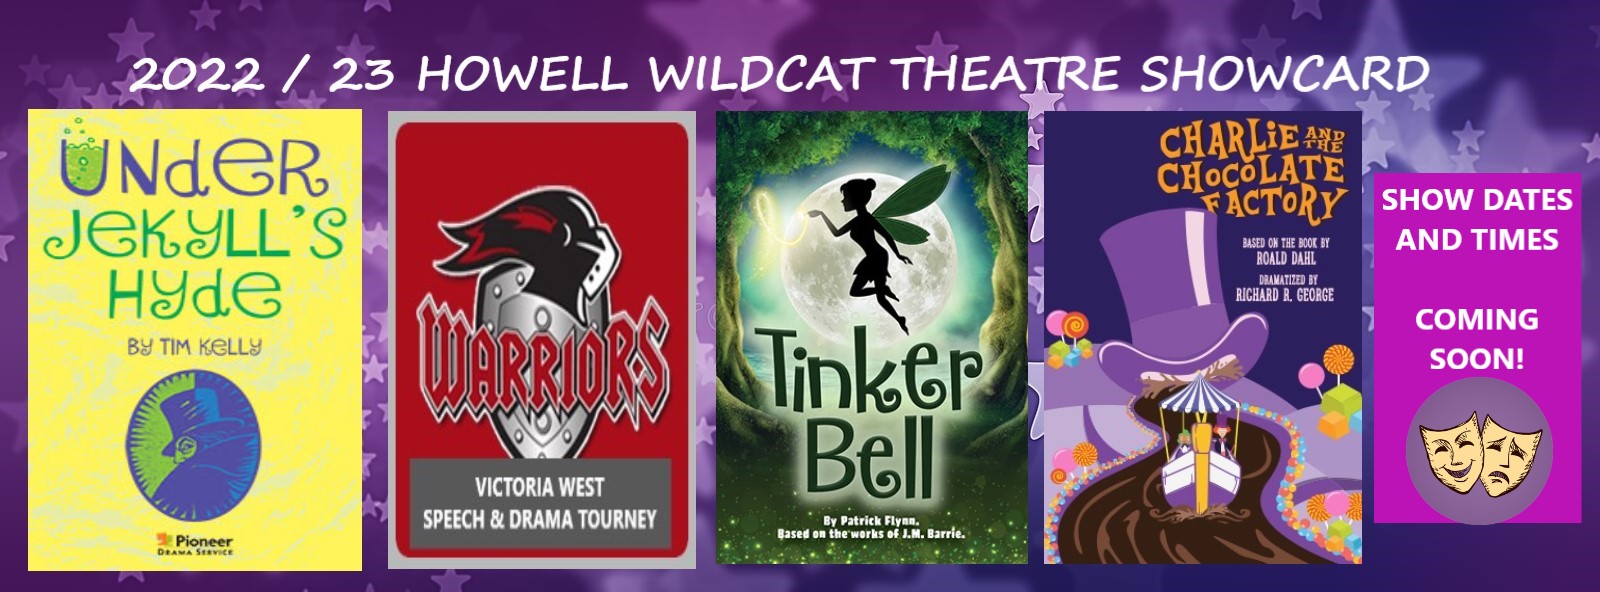 Wildcat Theatre Showcard